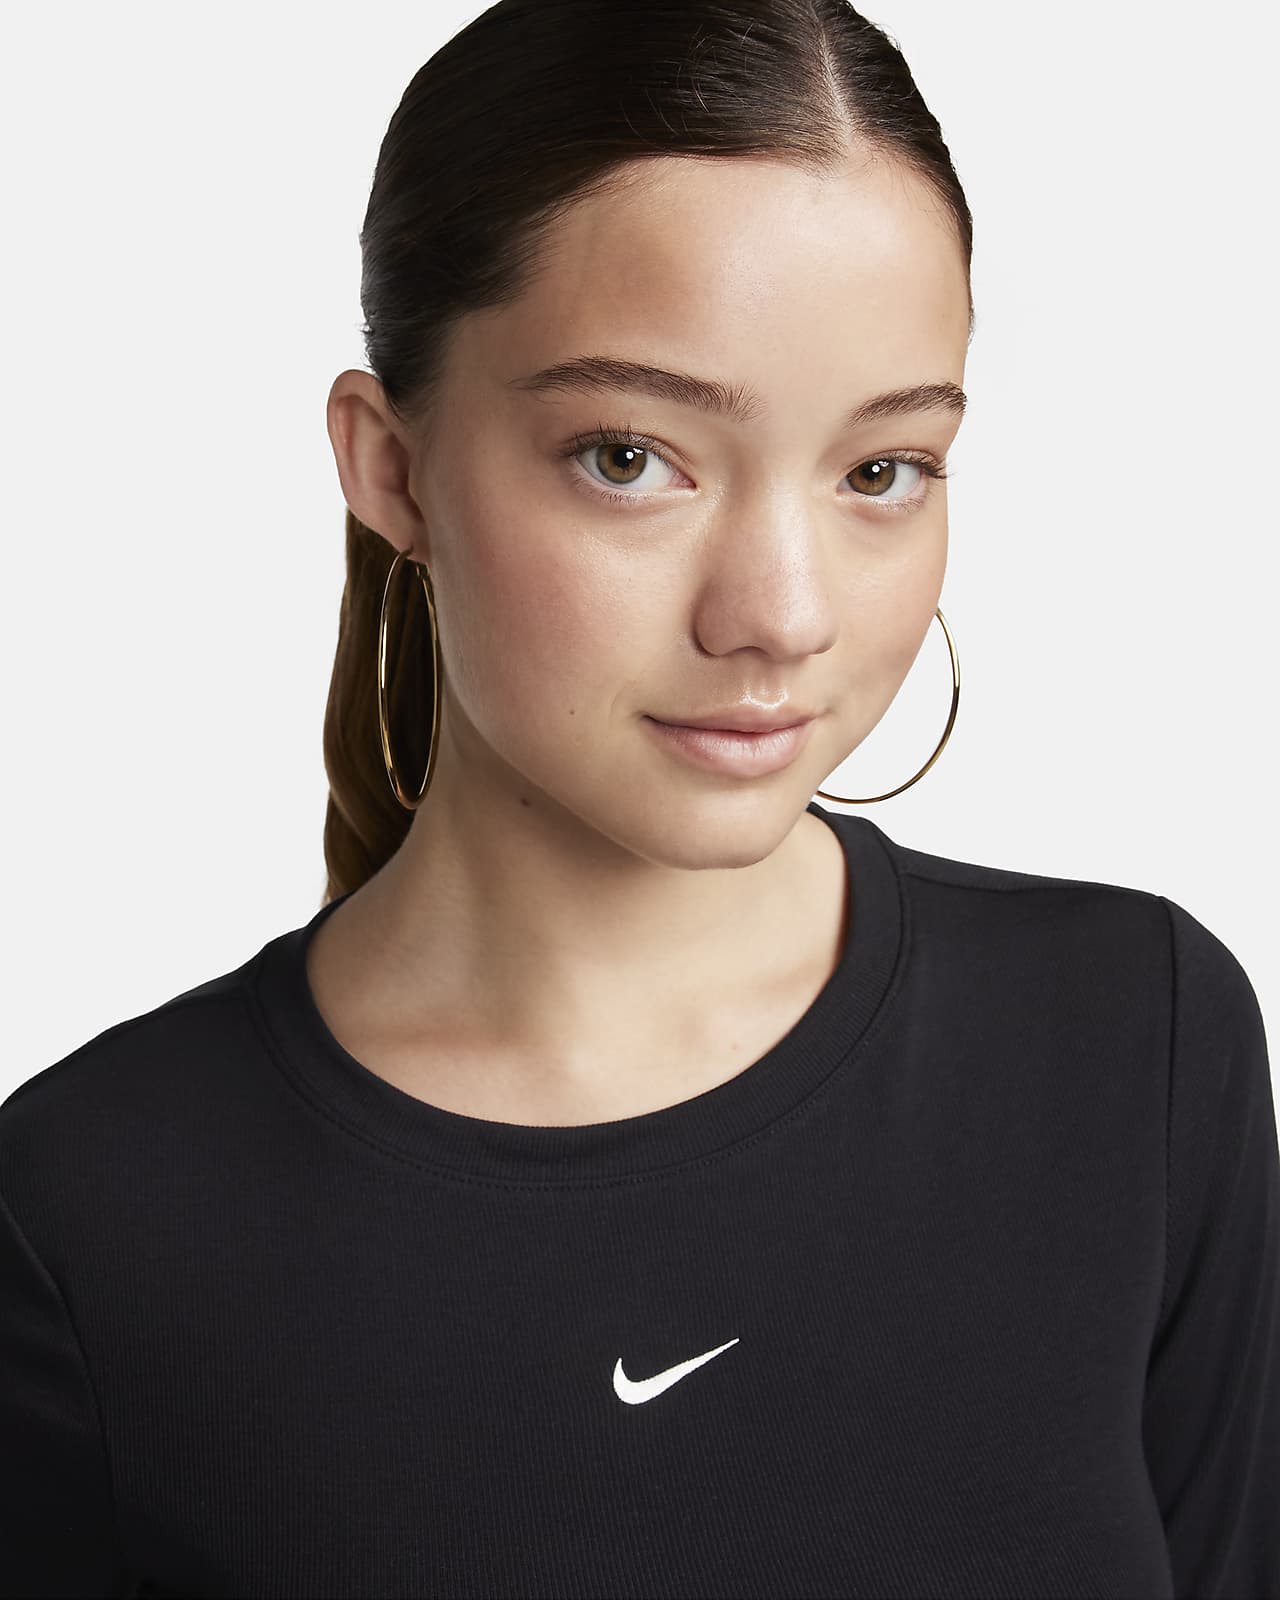 Women's Nike Sportswear Essential Crop Tee T-Shirt White Size XXL 